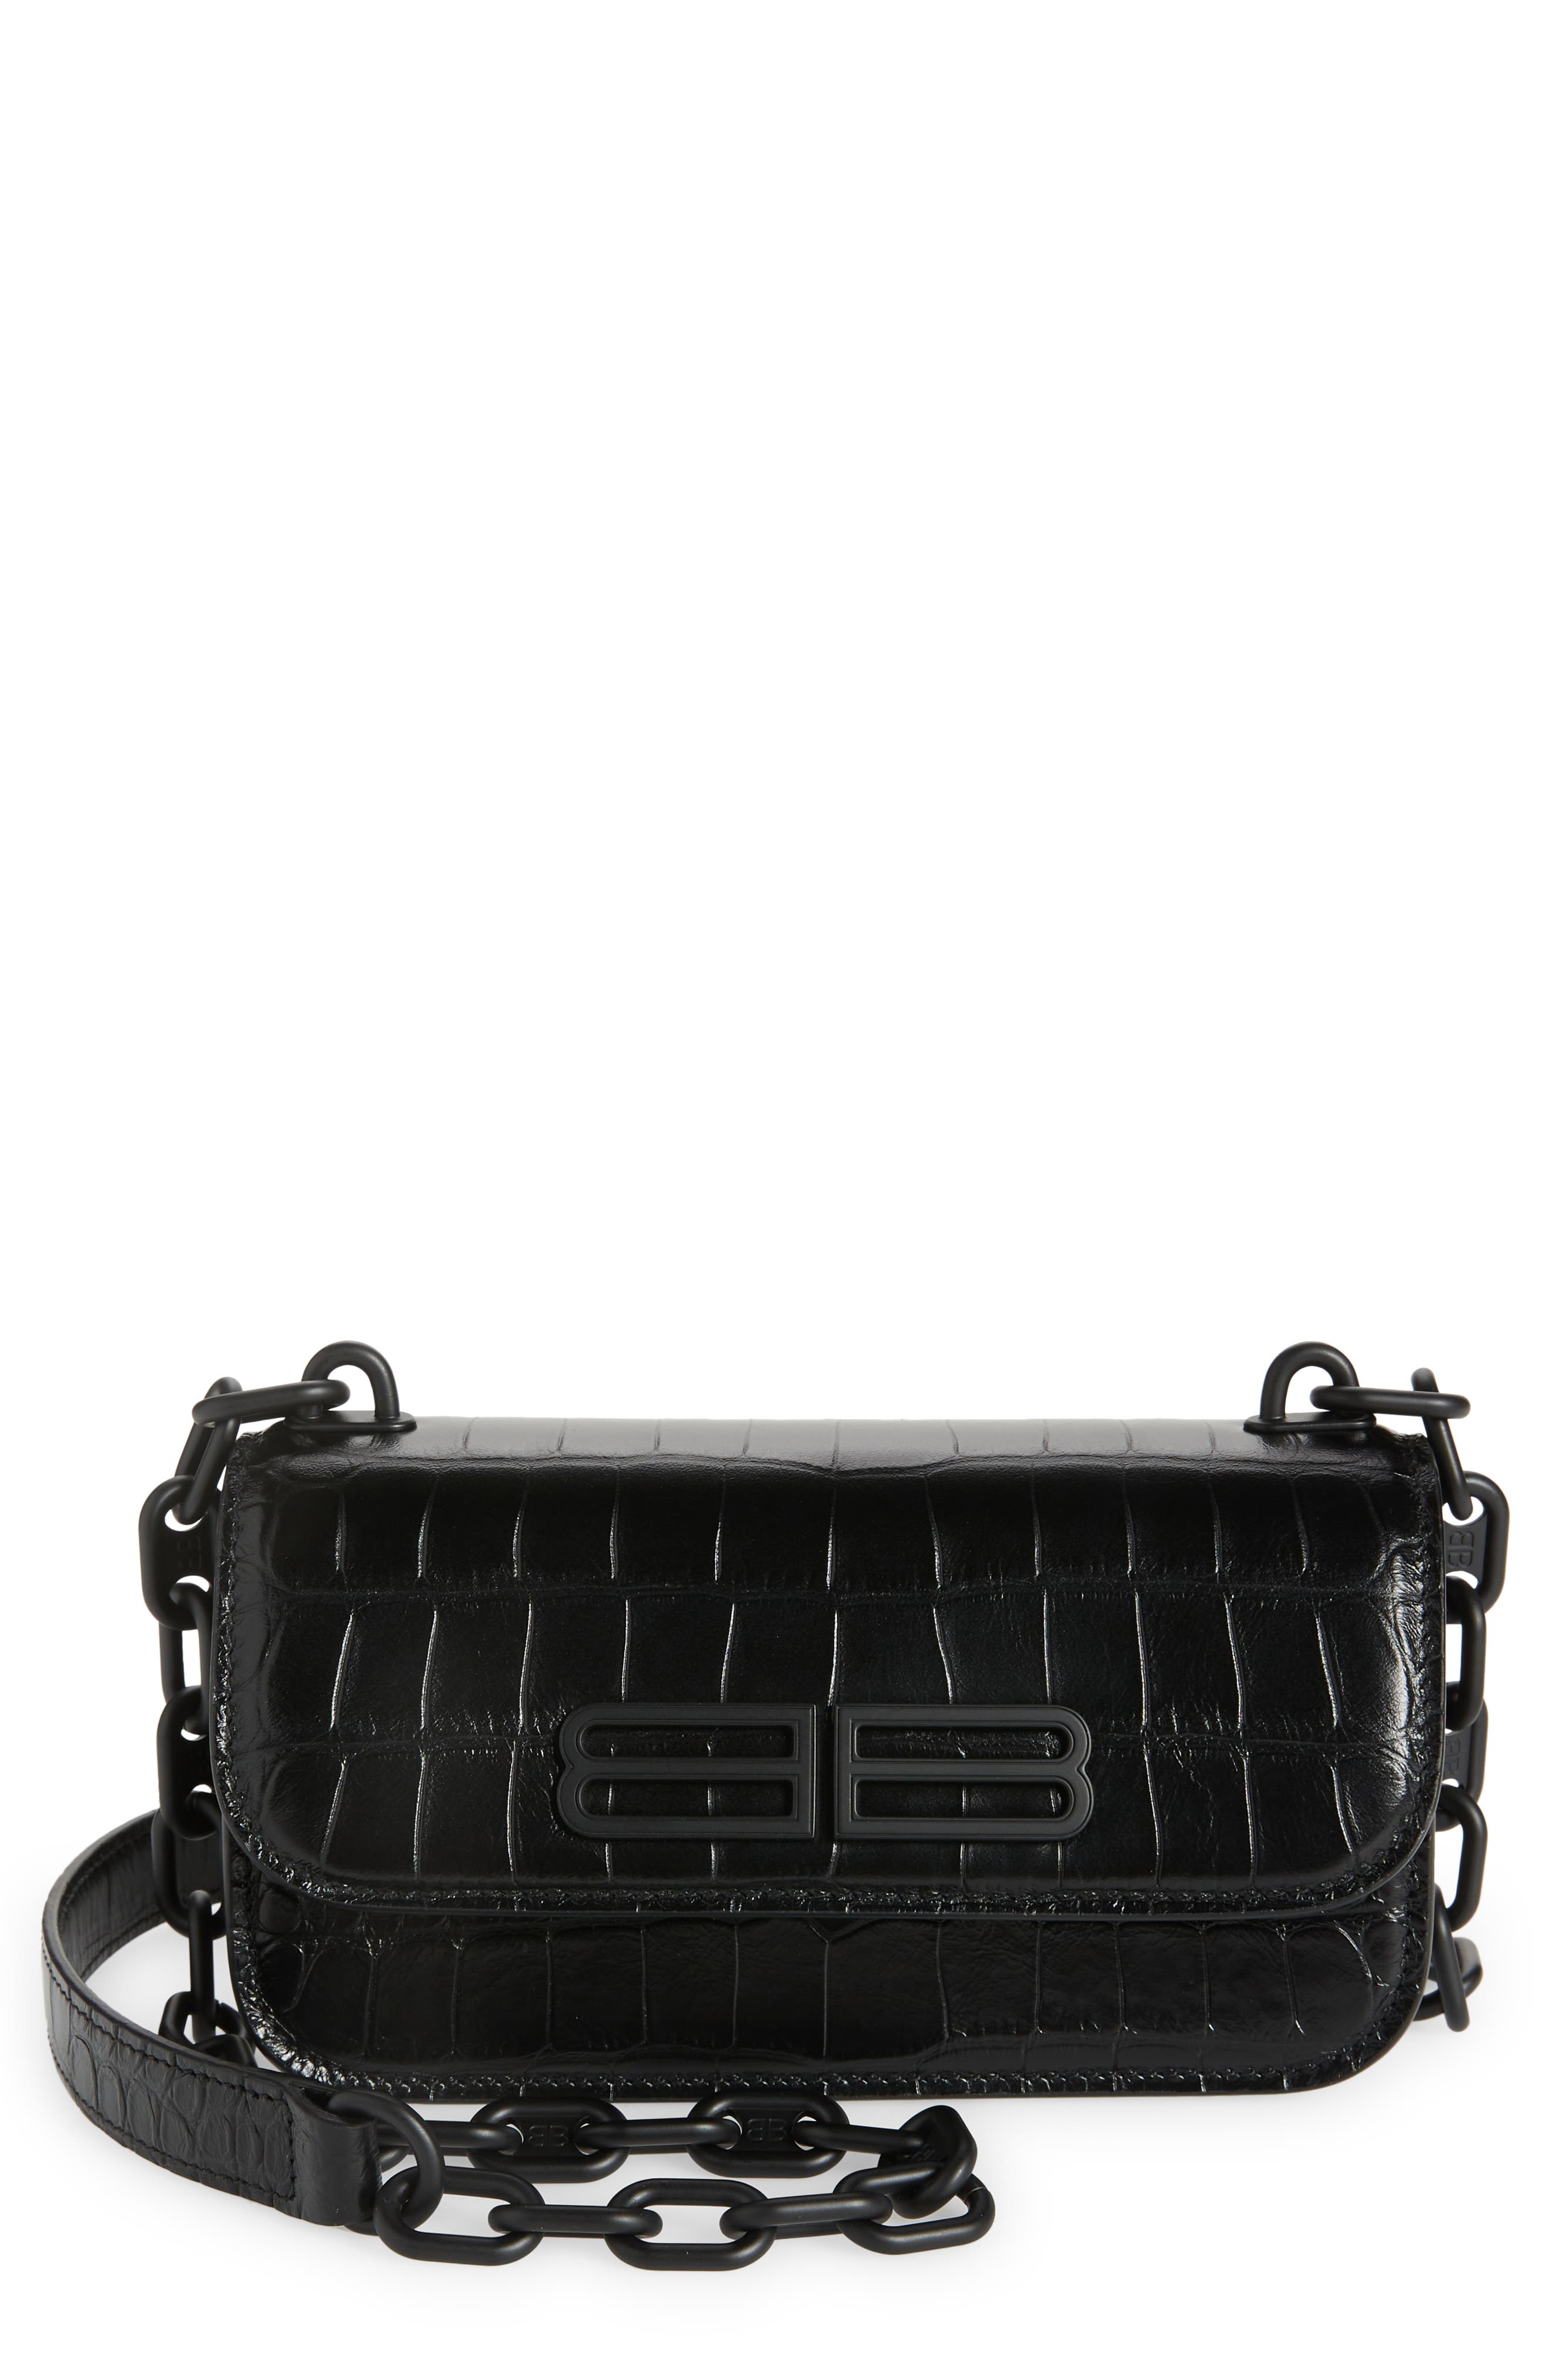 Balenciaga Gossip crocodile-print leather bag